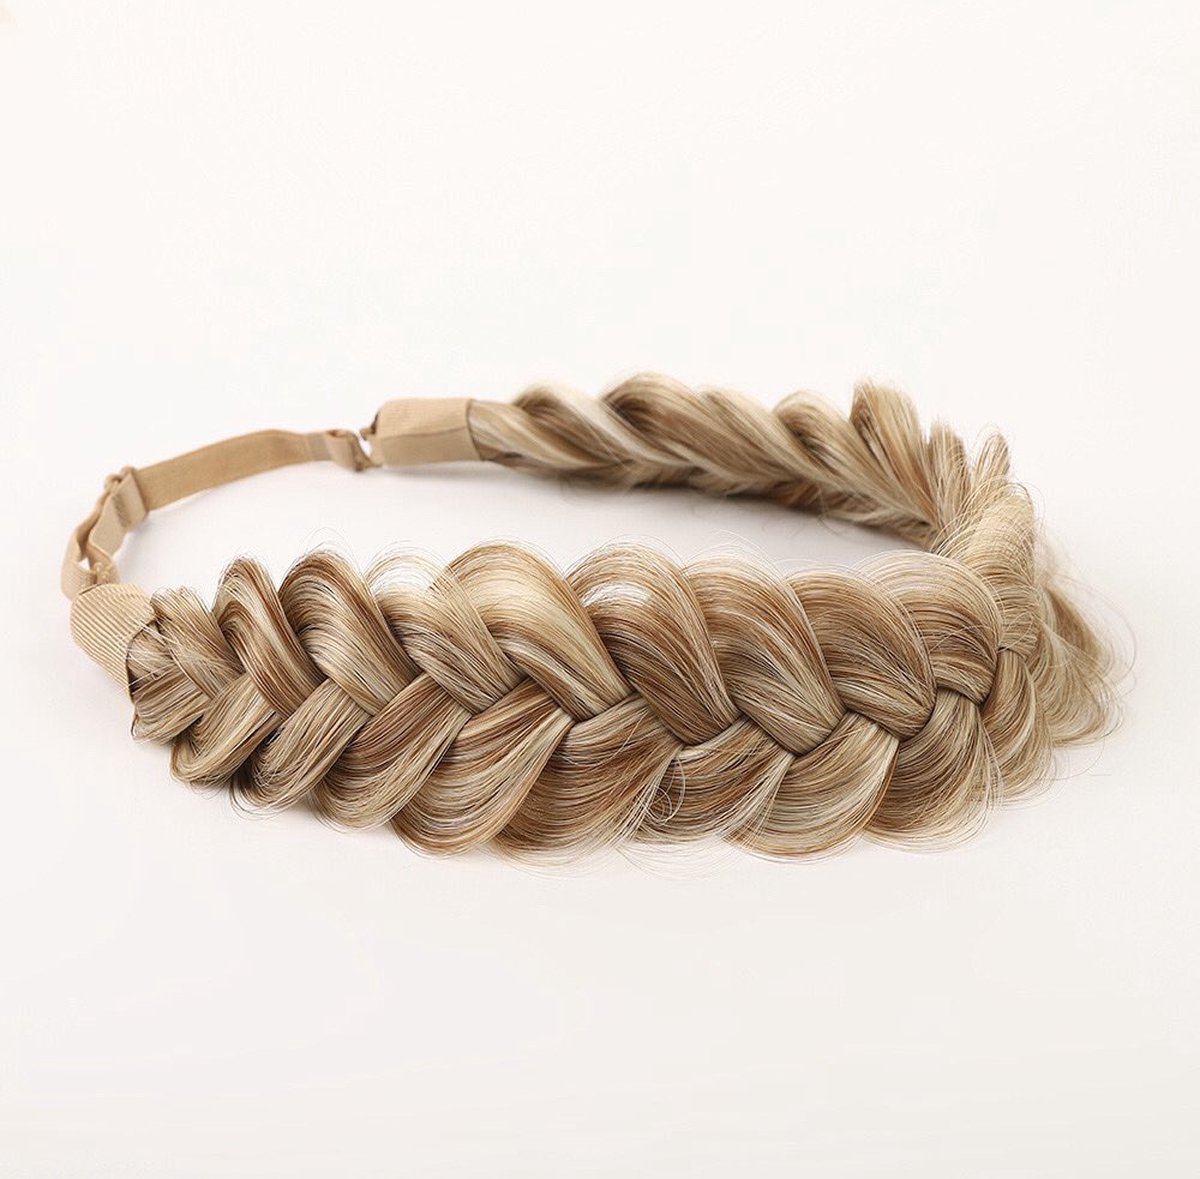 Lovely braids - Stockholm sunshine - hair braids - messy - haarband - infinity braids - Haarvlecht band - fashion - diadeem - festival look - festival hair - hair braid - hair fashion - haarmode